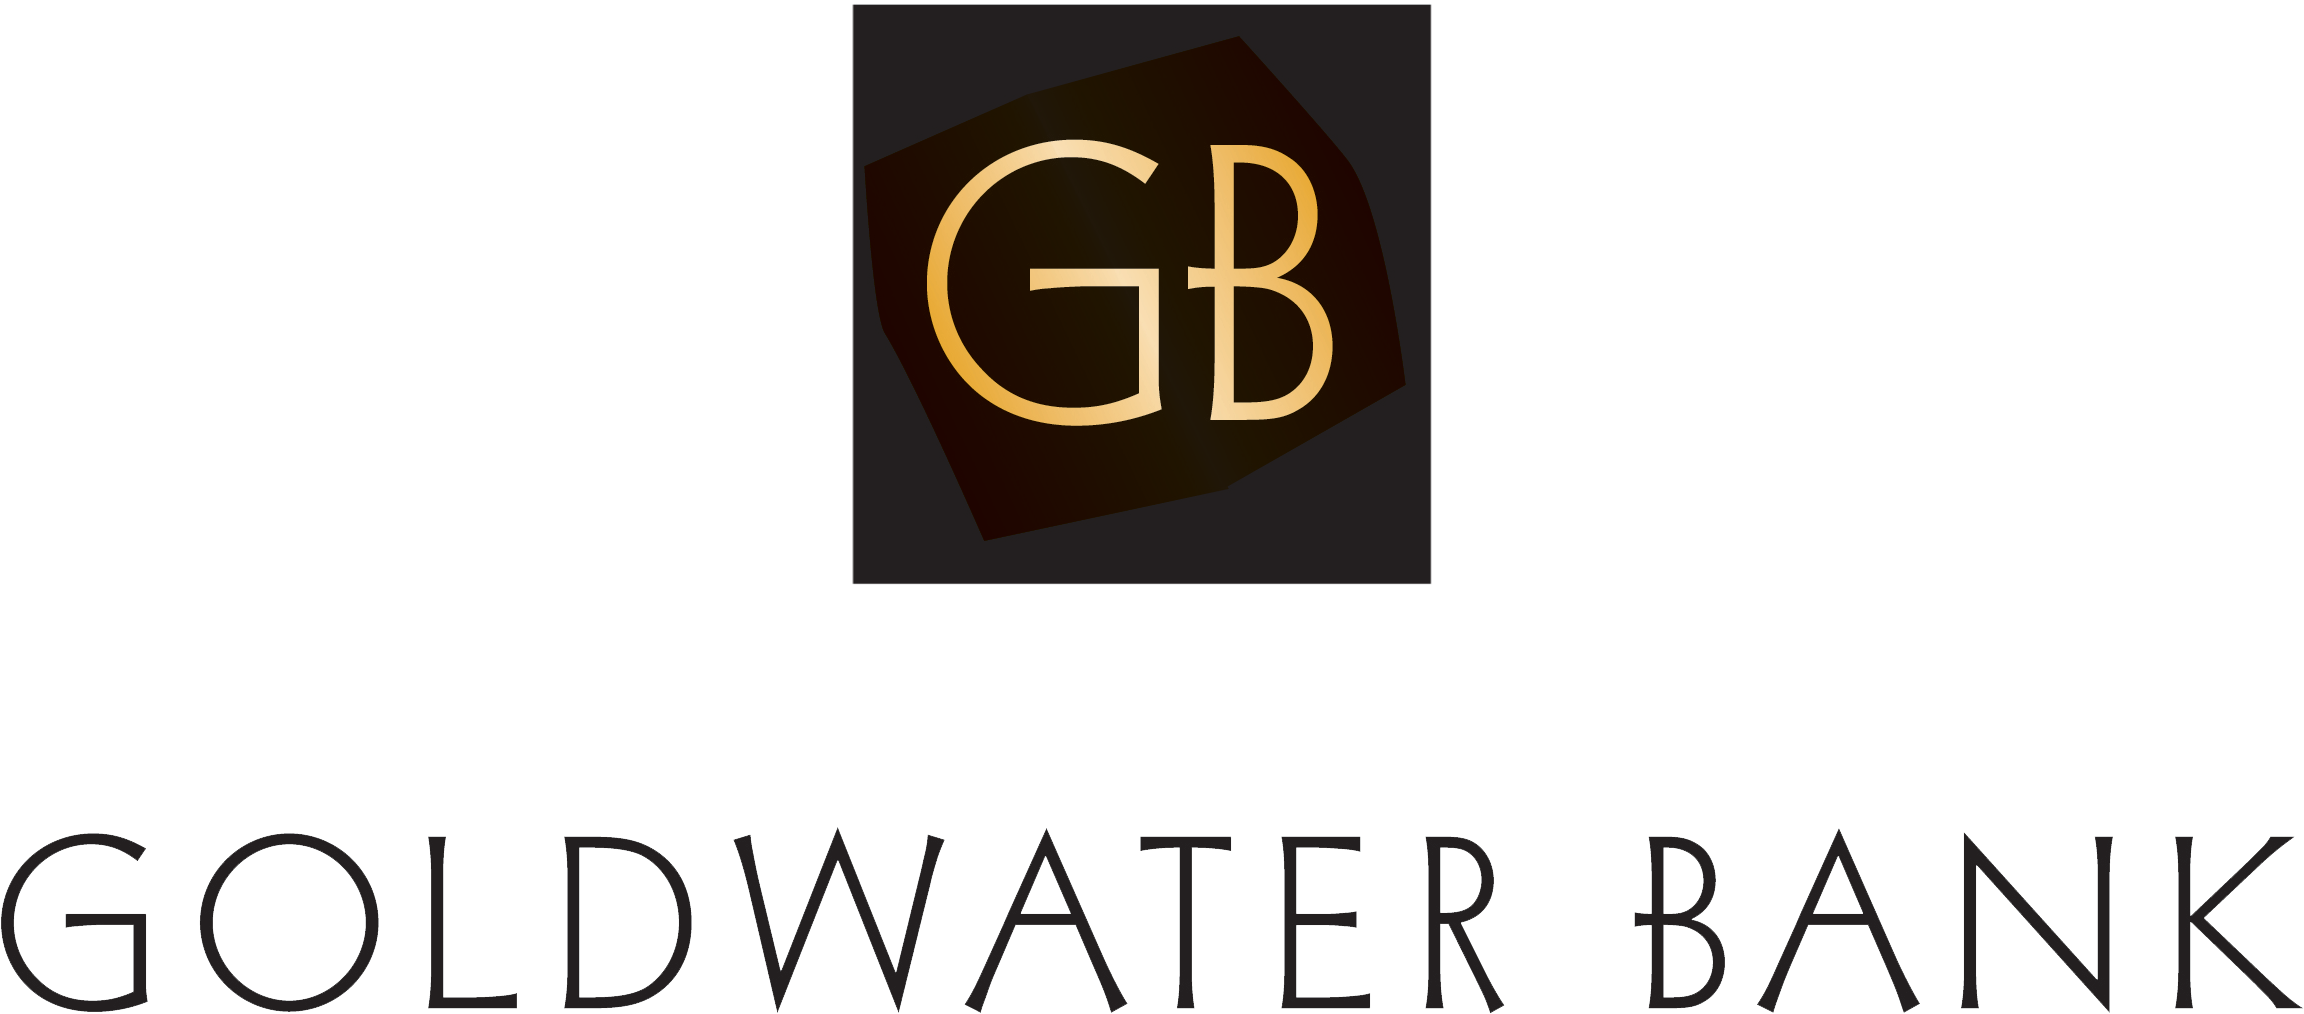 Zillow Logo Transparent - Goldwater Bank (2348x1097), Png Download